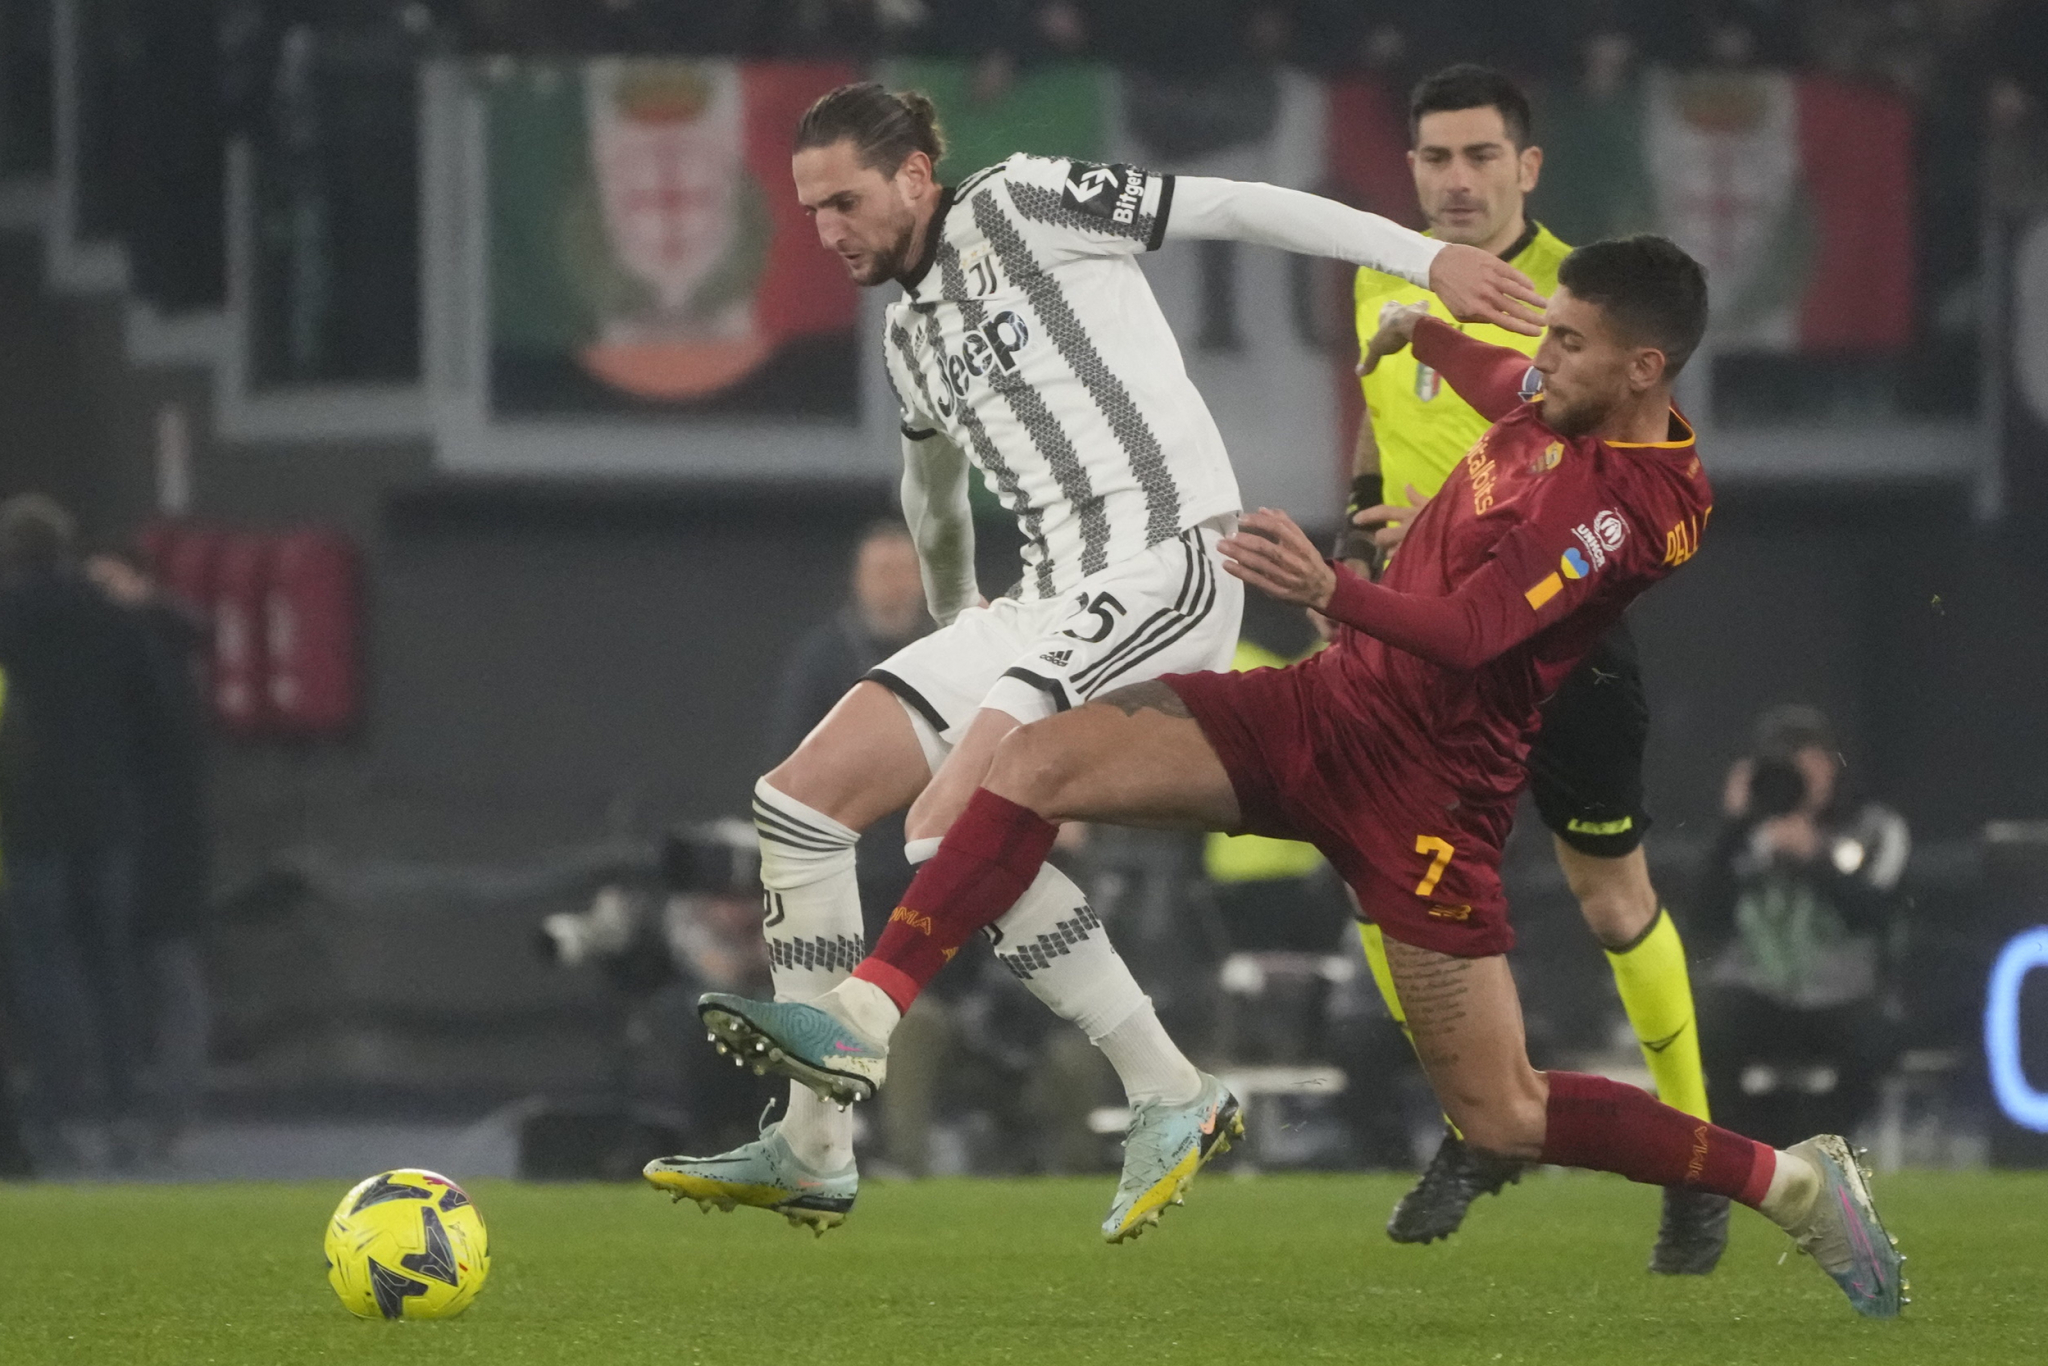 BOMBA MANSINIJA REŠILA DERBI Roma nokautirala Juventus, Kin dobio crveni karton za manje od 60 sekundi